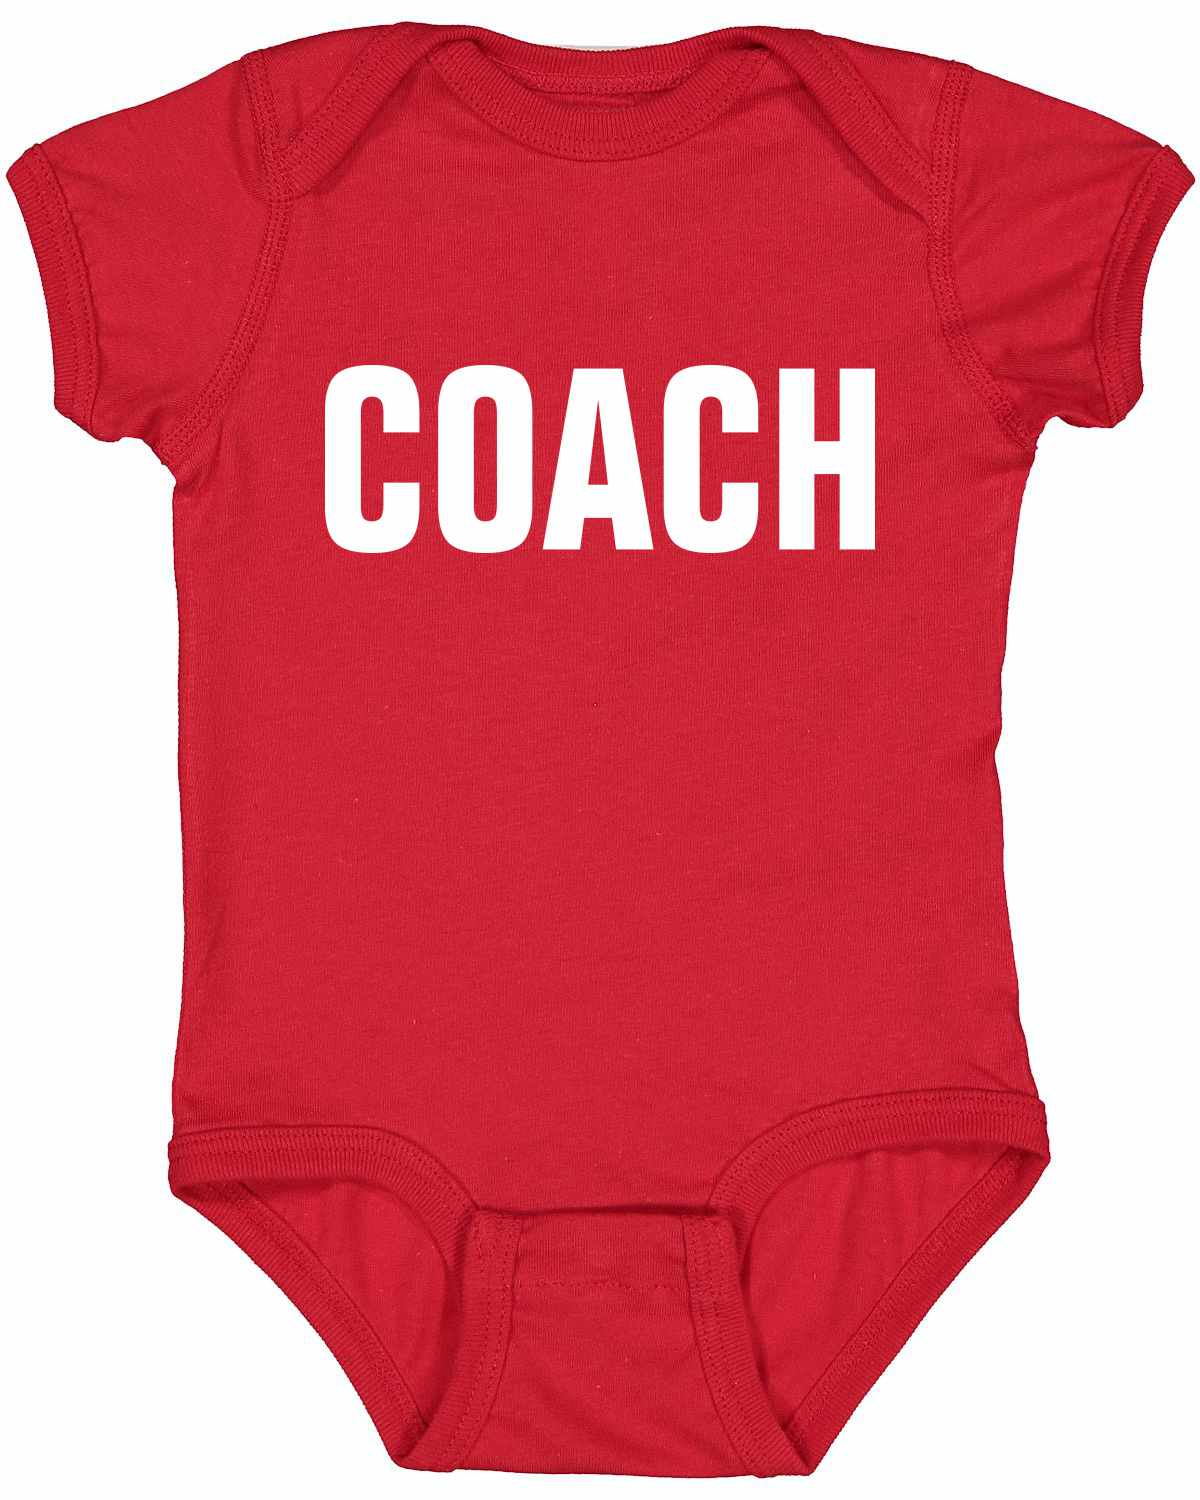 COACH on Infant BodySuit